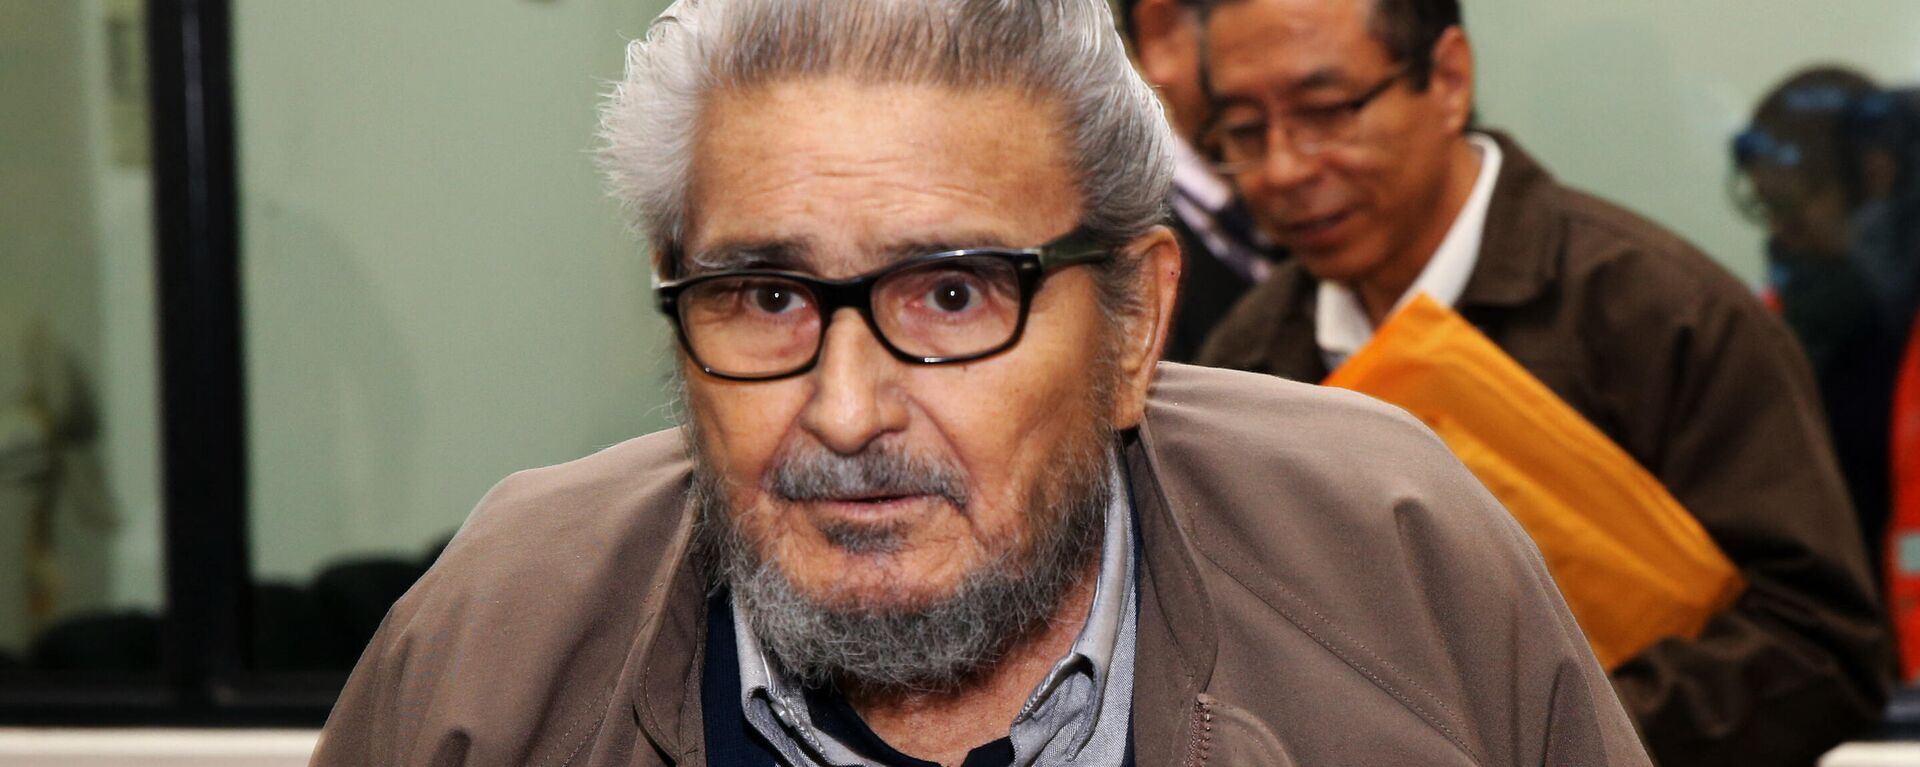 Abimael Guzmán, líder de la organización terrorista Sendero Luminoso - Sputnik Mundo, 1920, 13.09.2021